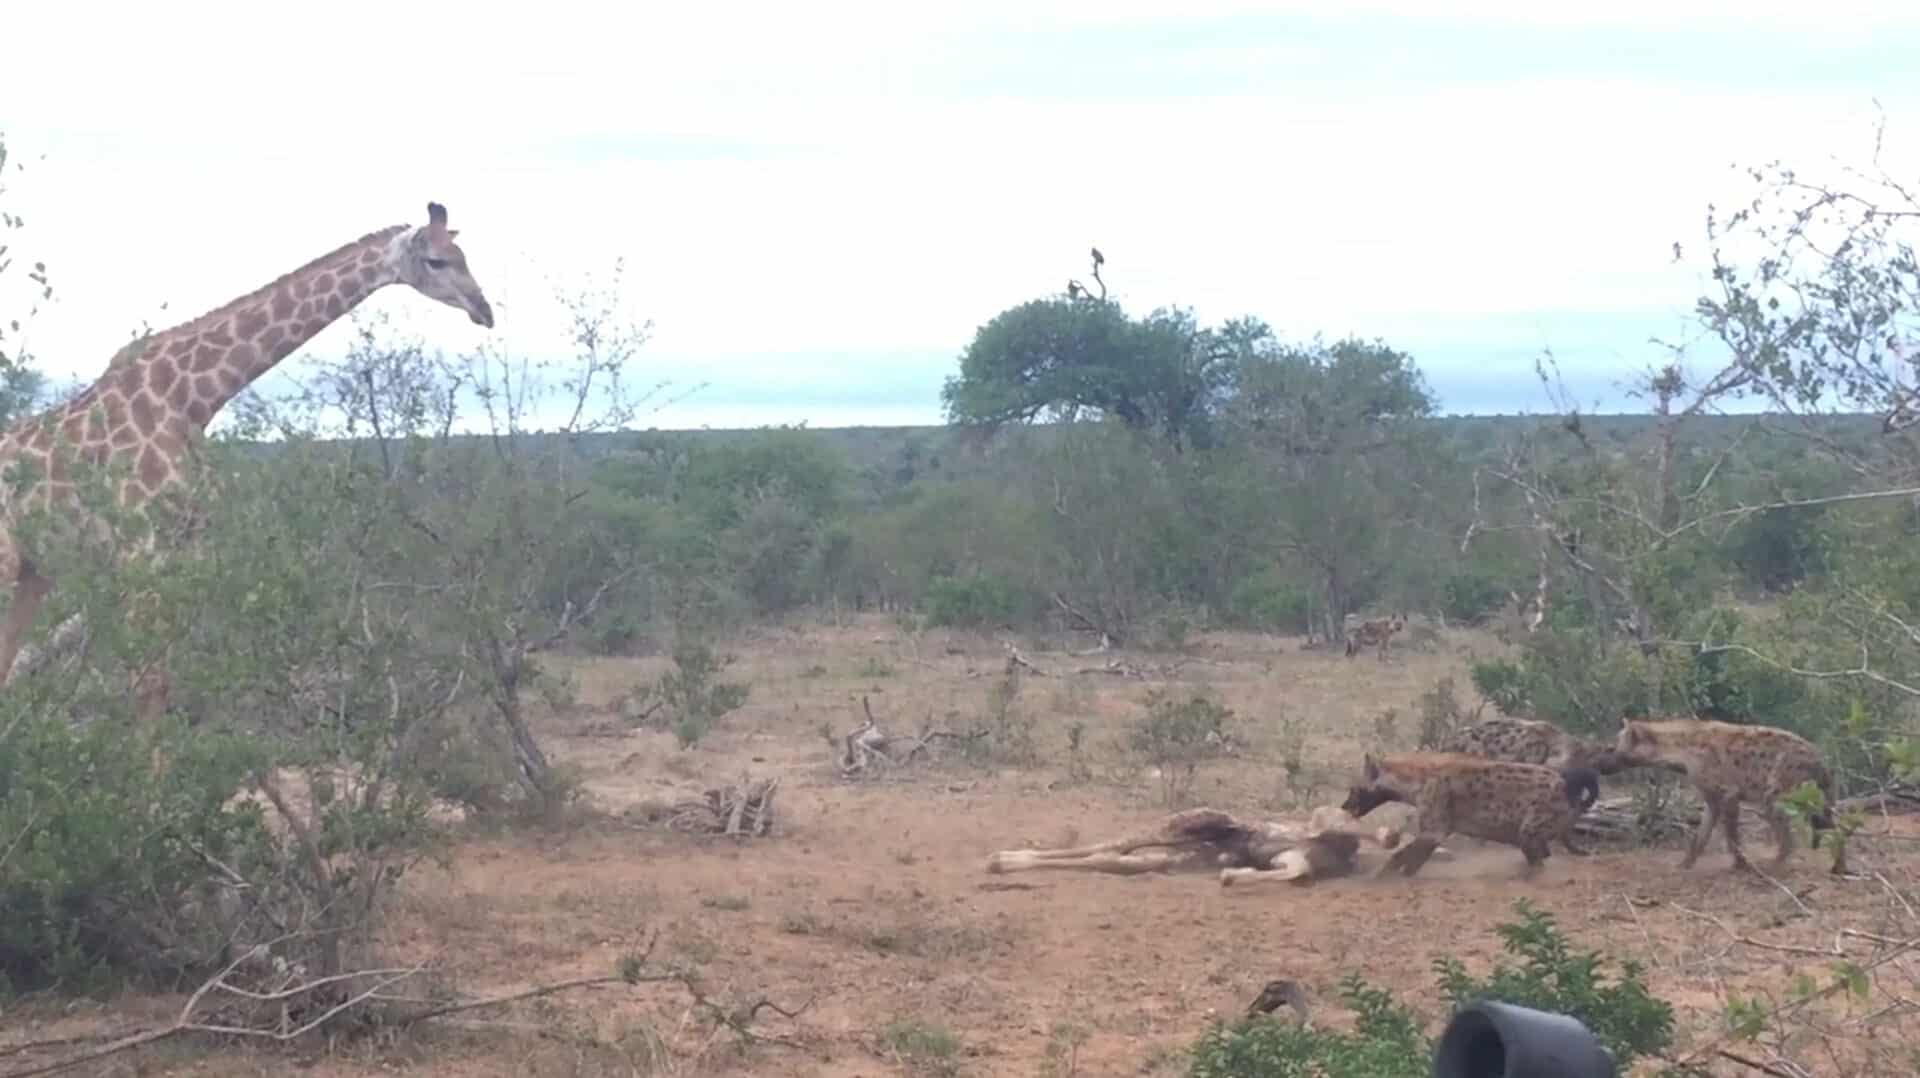 Giraffe vs hyenas